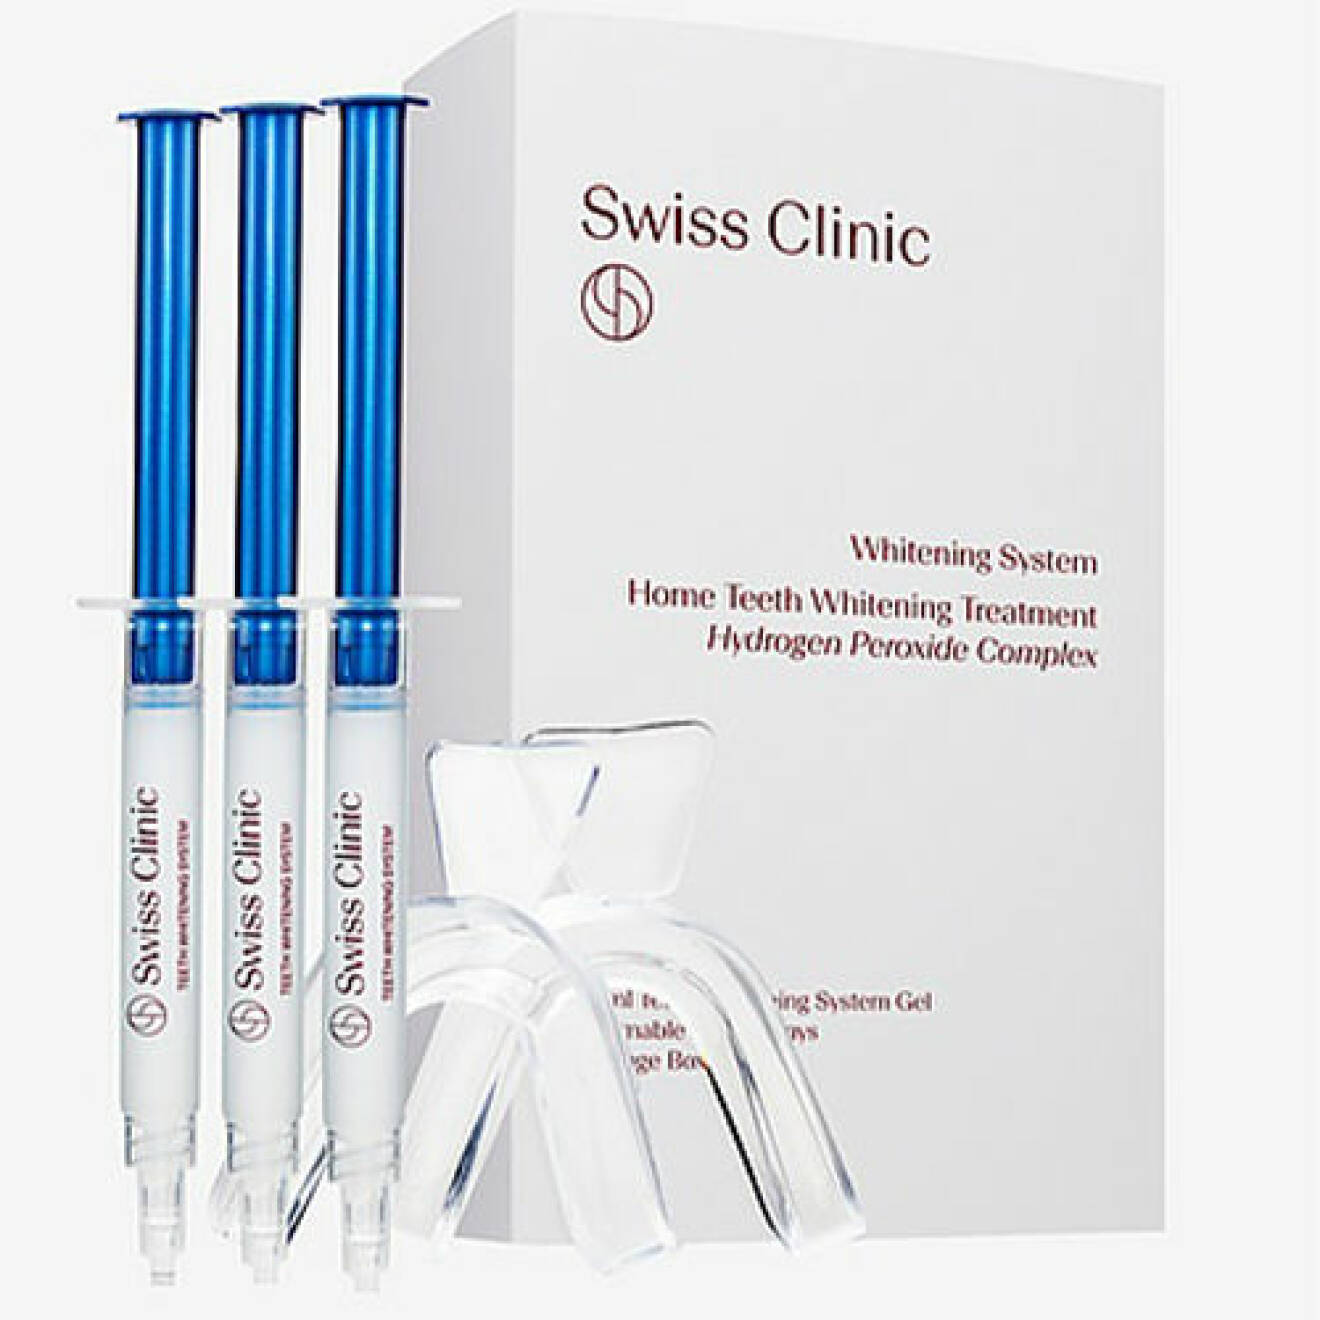 Tandblekningskit från swiss clinic